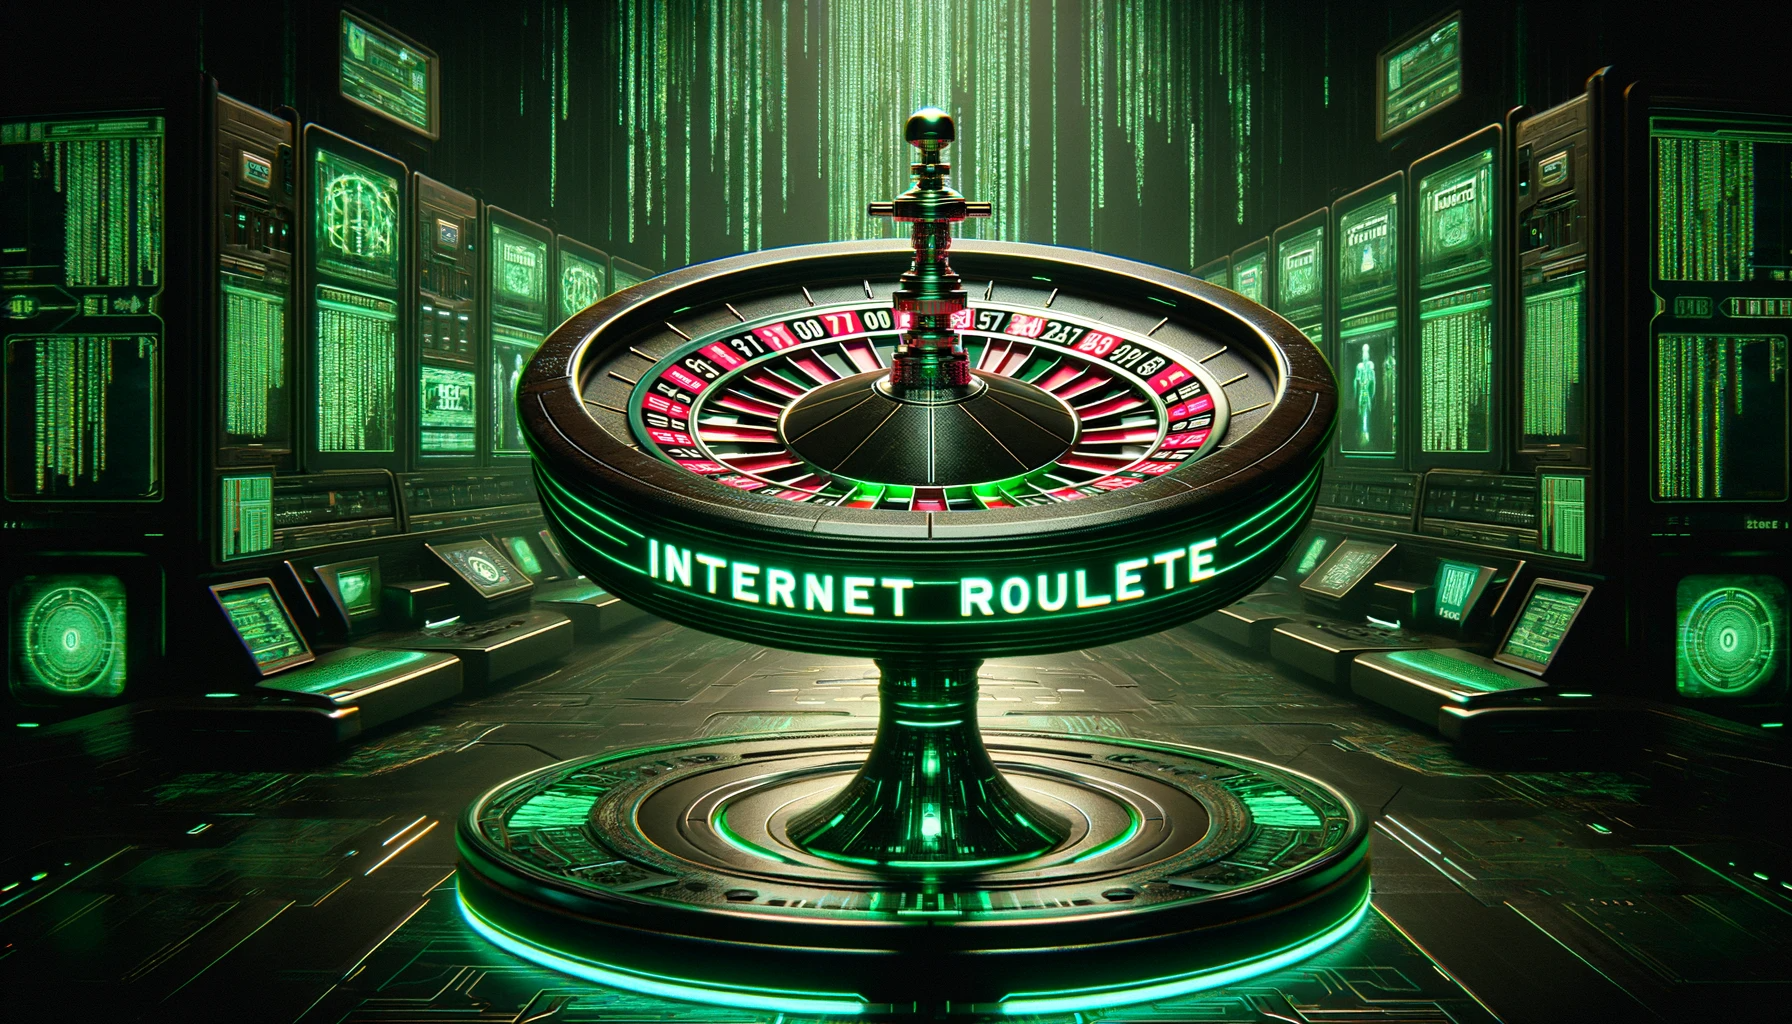 Internet Roulette